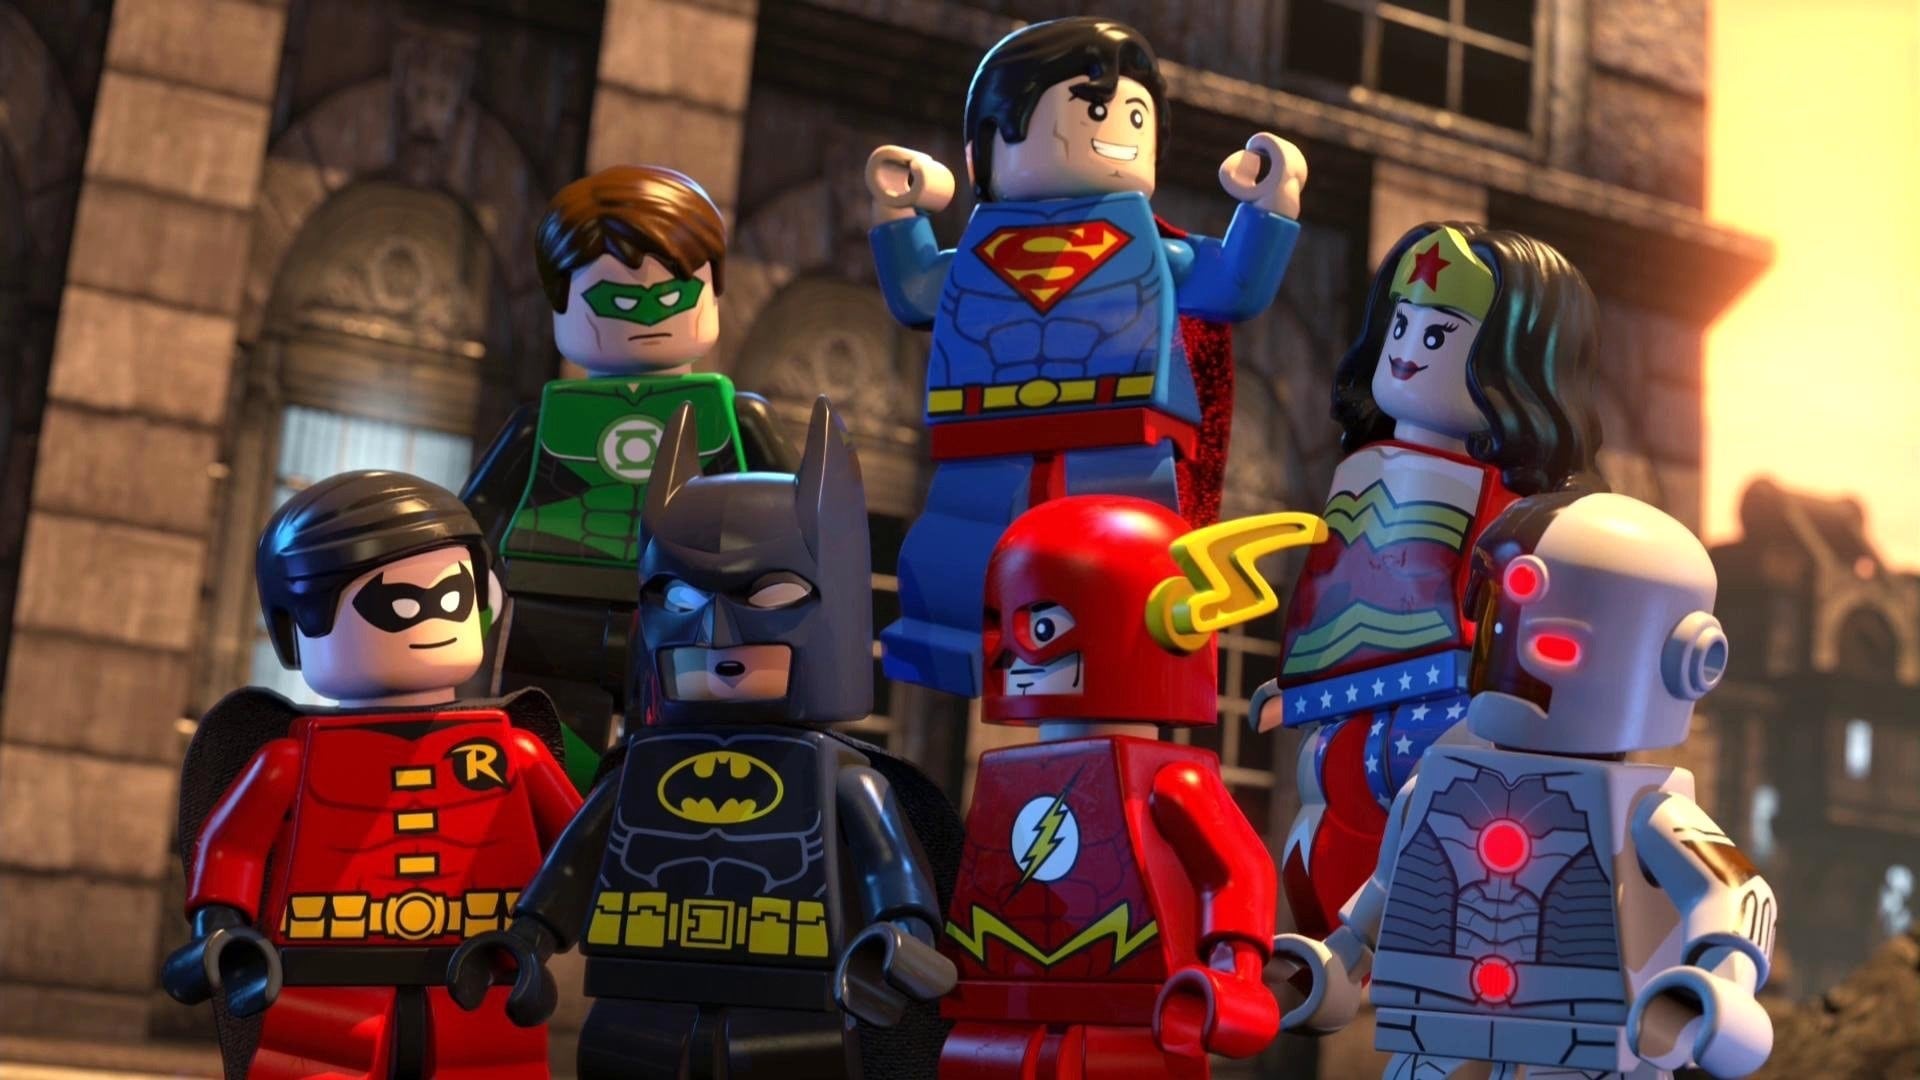 Xem Phim Lego Batman: The Movie - DC Super Heroes Unite (Lego Batman: The Movie - DC Super Heroes Unite)